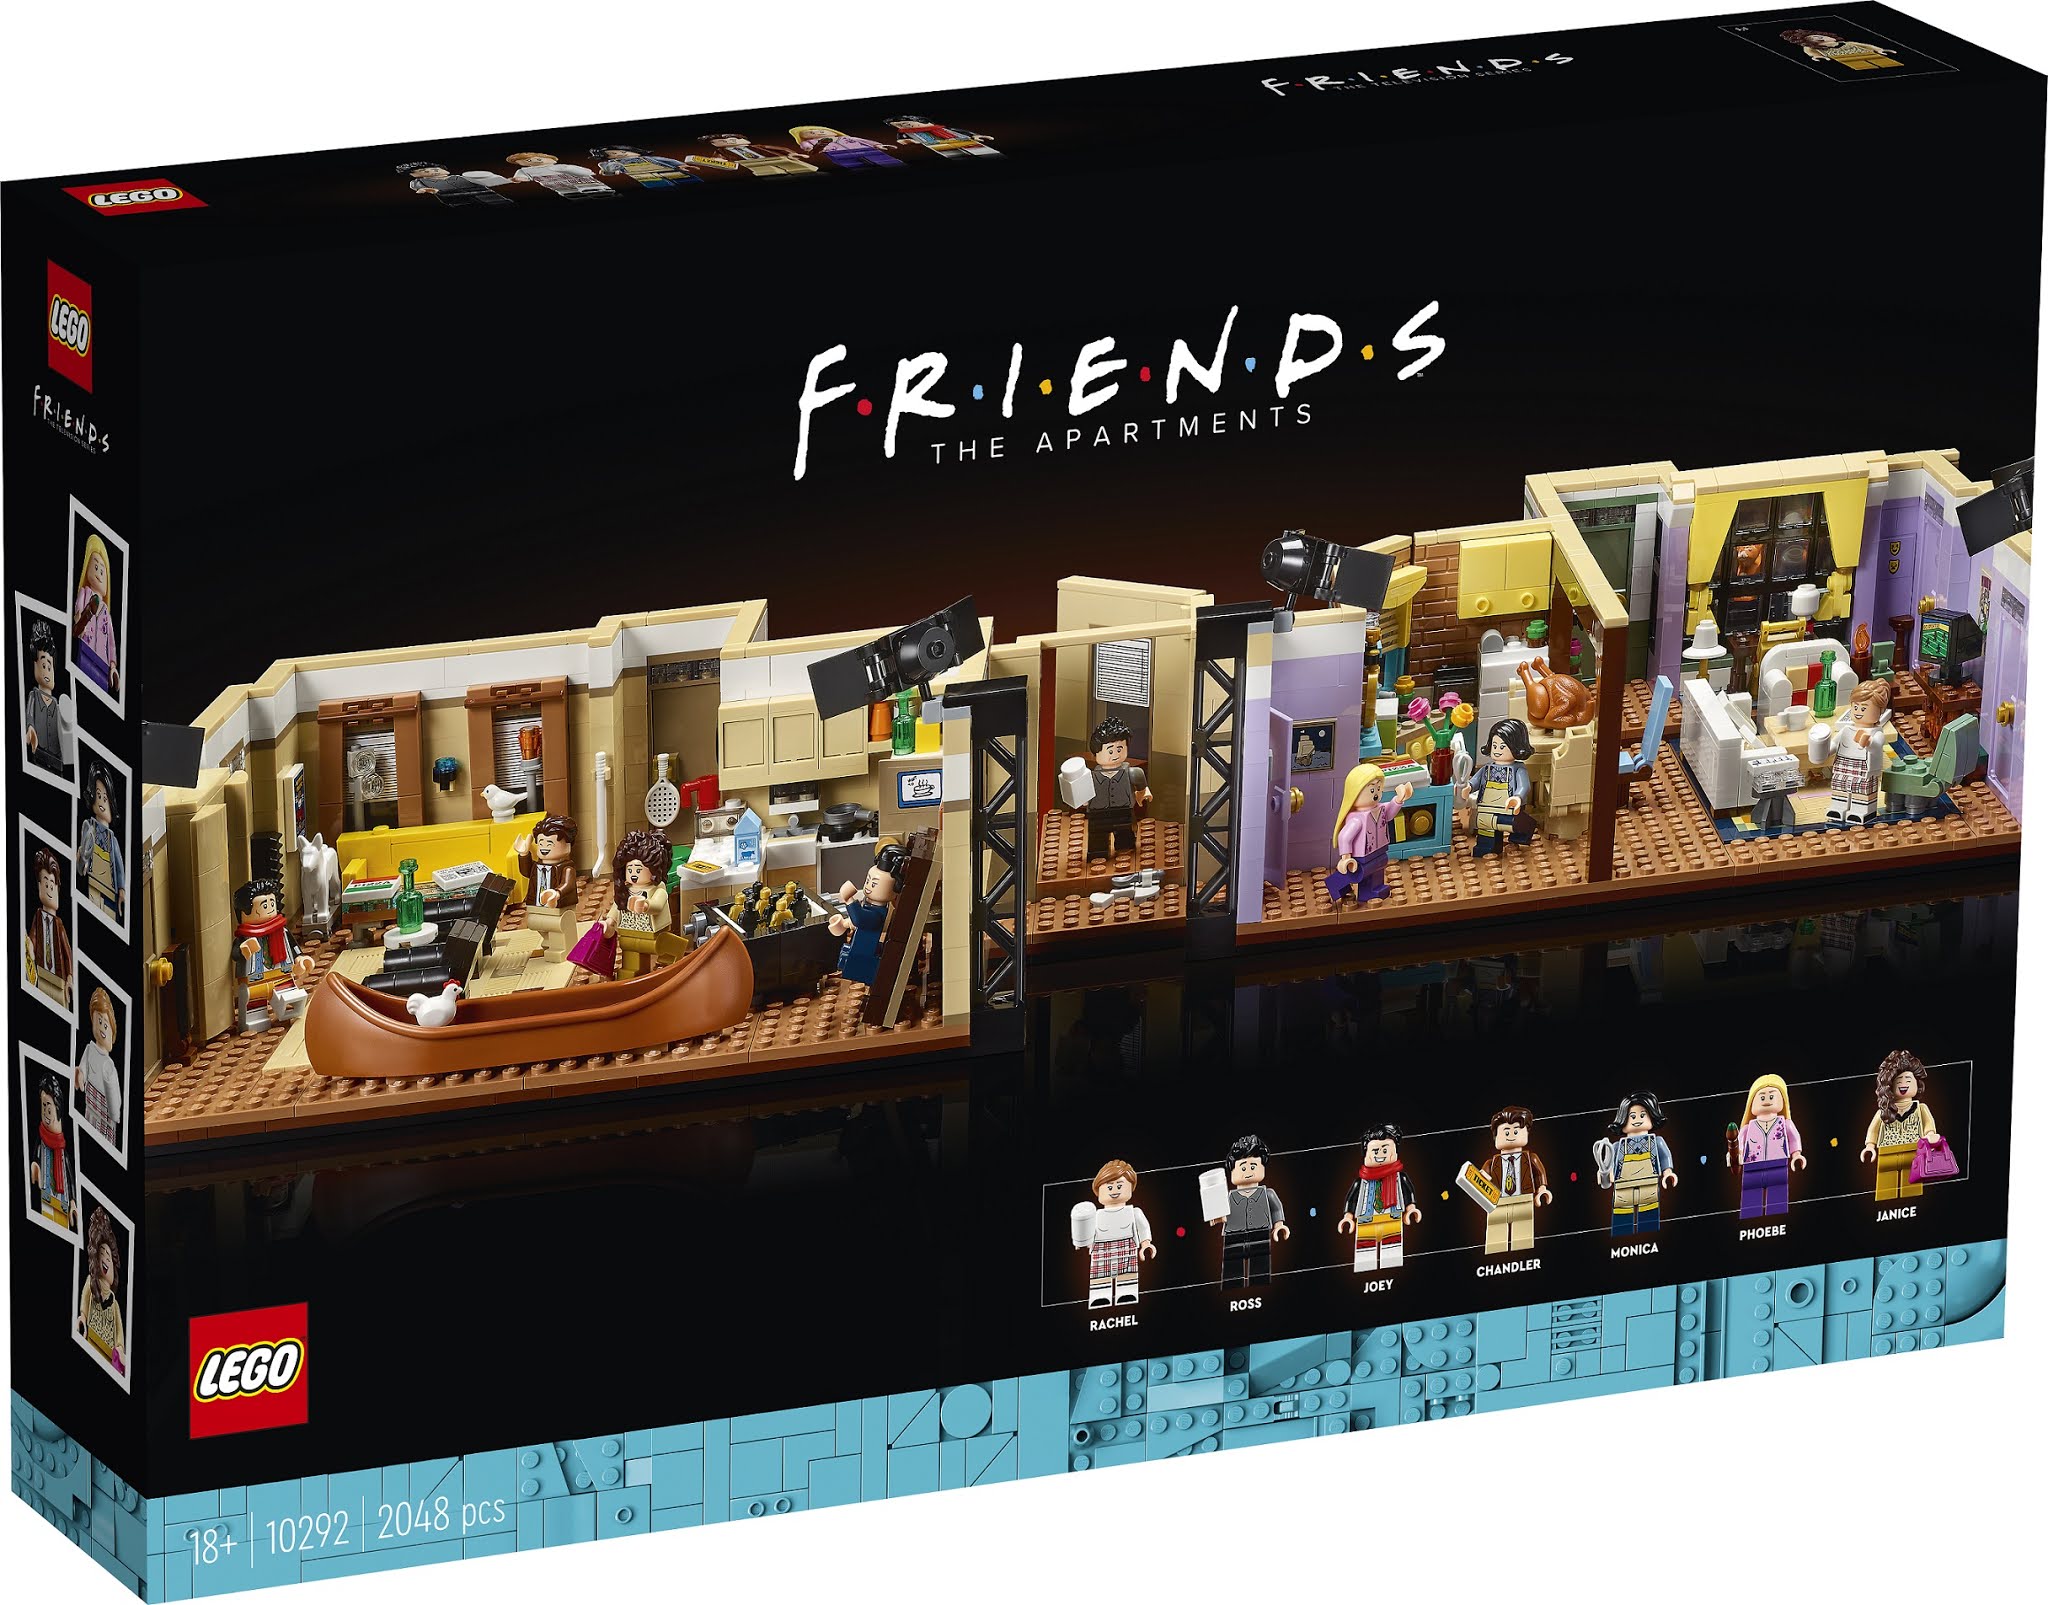 LEGO F.R.I.E.N.D.S Apartments Set announced - aimed at fans